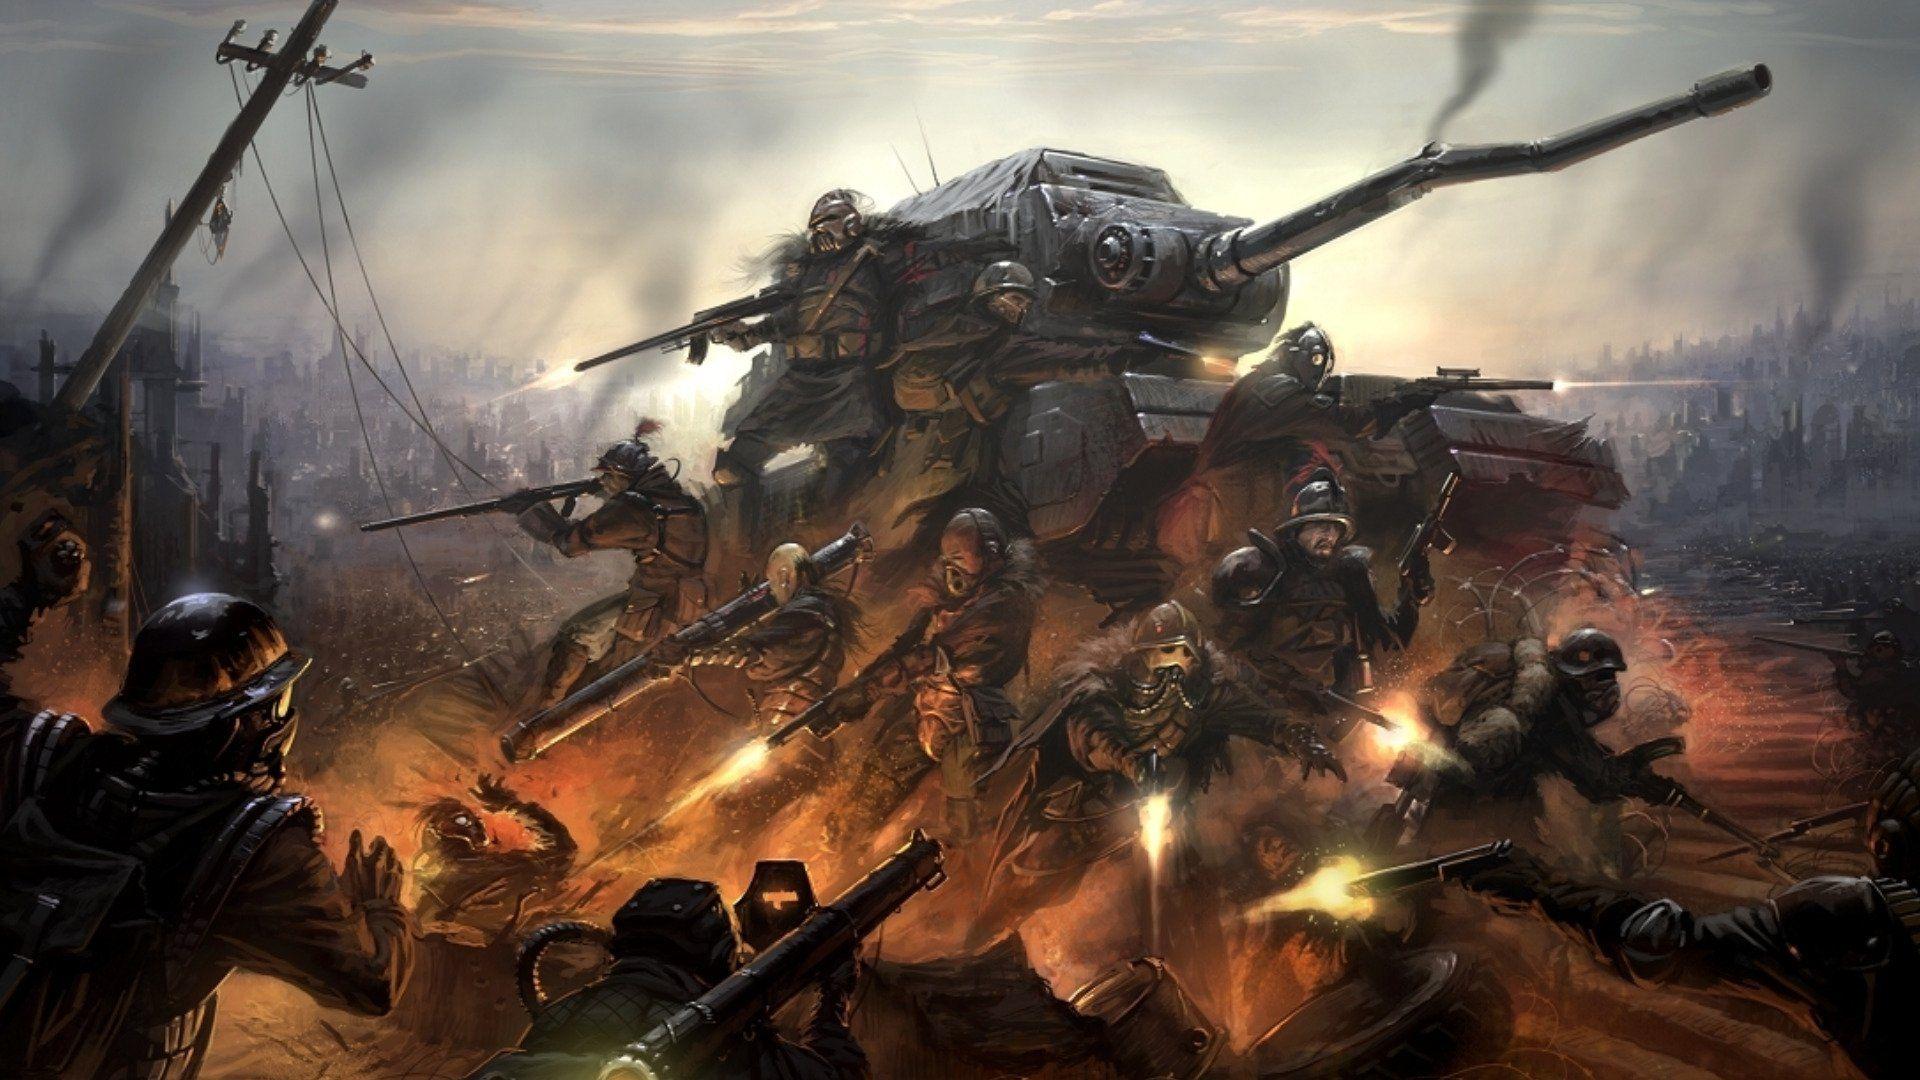 Warrior Battle 4K wallpaper download